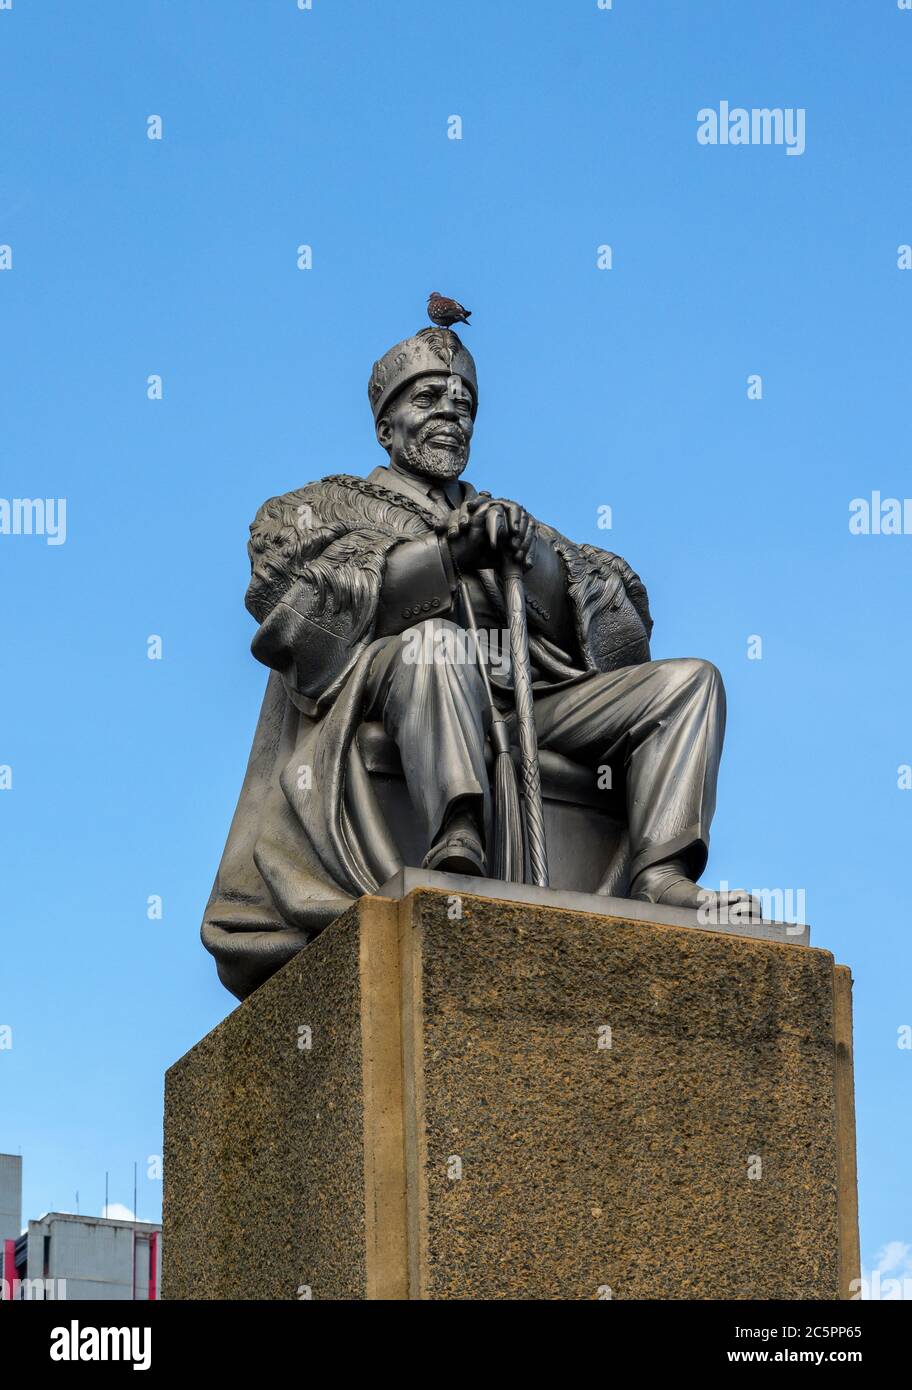 Statua di Jomo Kenyatta (primo presidente della statua del Kenya) fuori dal centro internazionale del KICC (Kenya International Convention Center), Nairobi, Kenya, Africa orientale Foto Stock